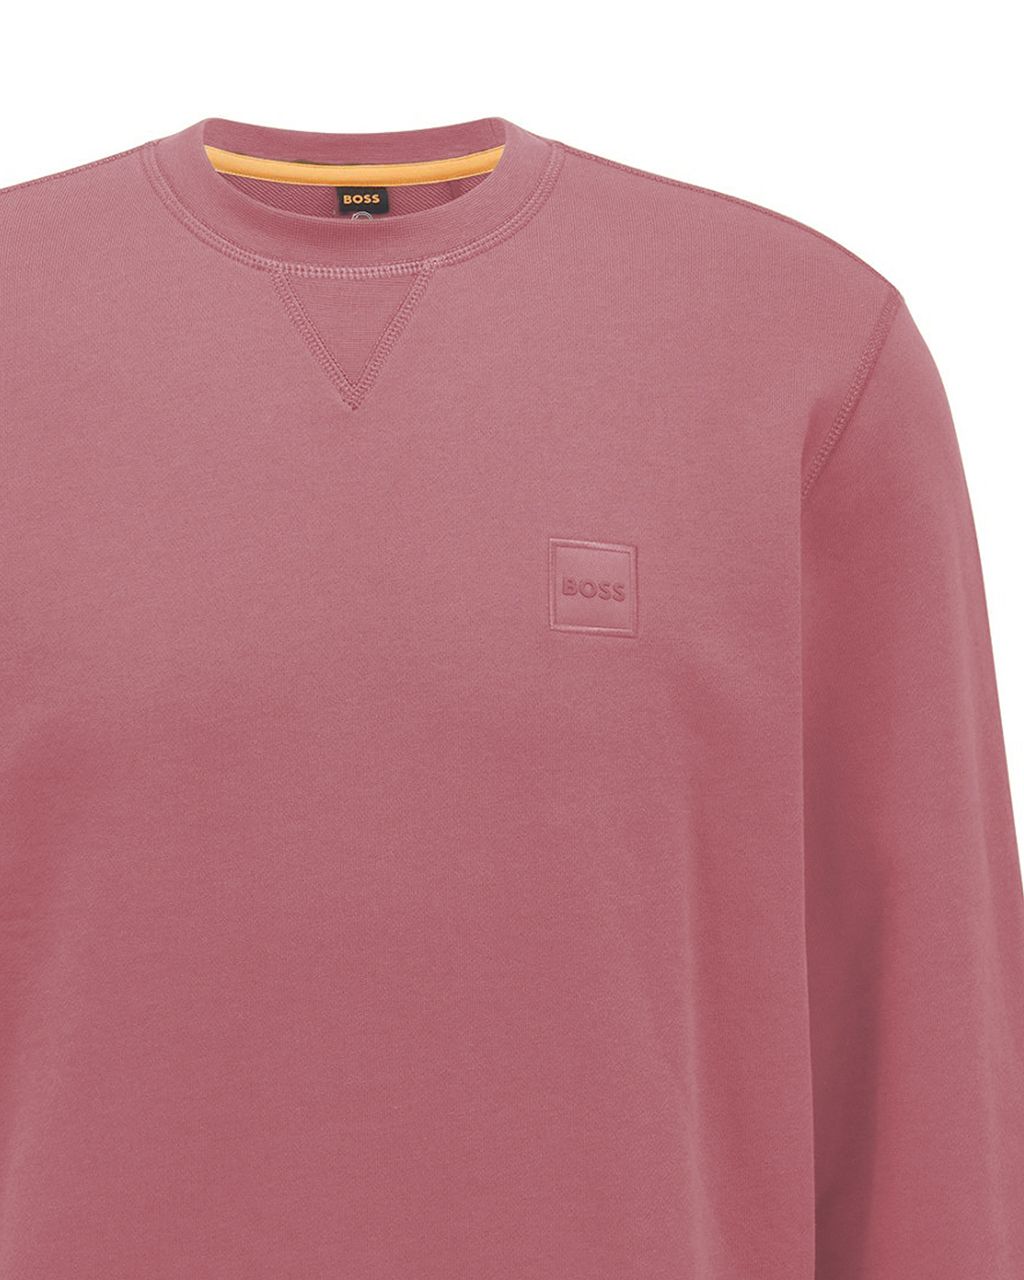 Hugo Boss Casual Westart Sweater Rood 076817-001-L